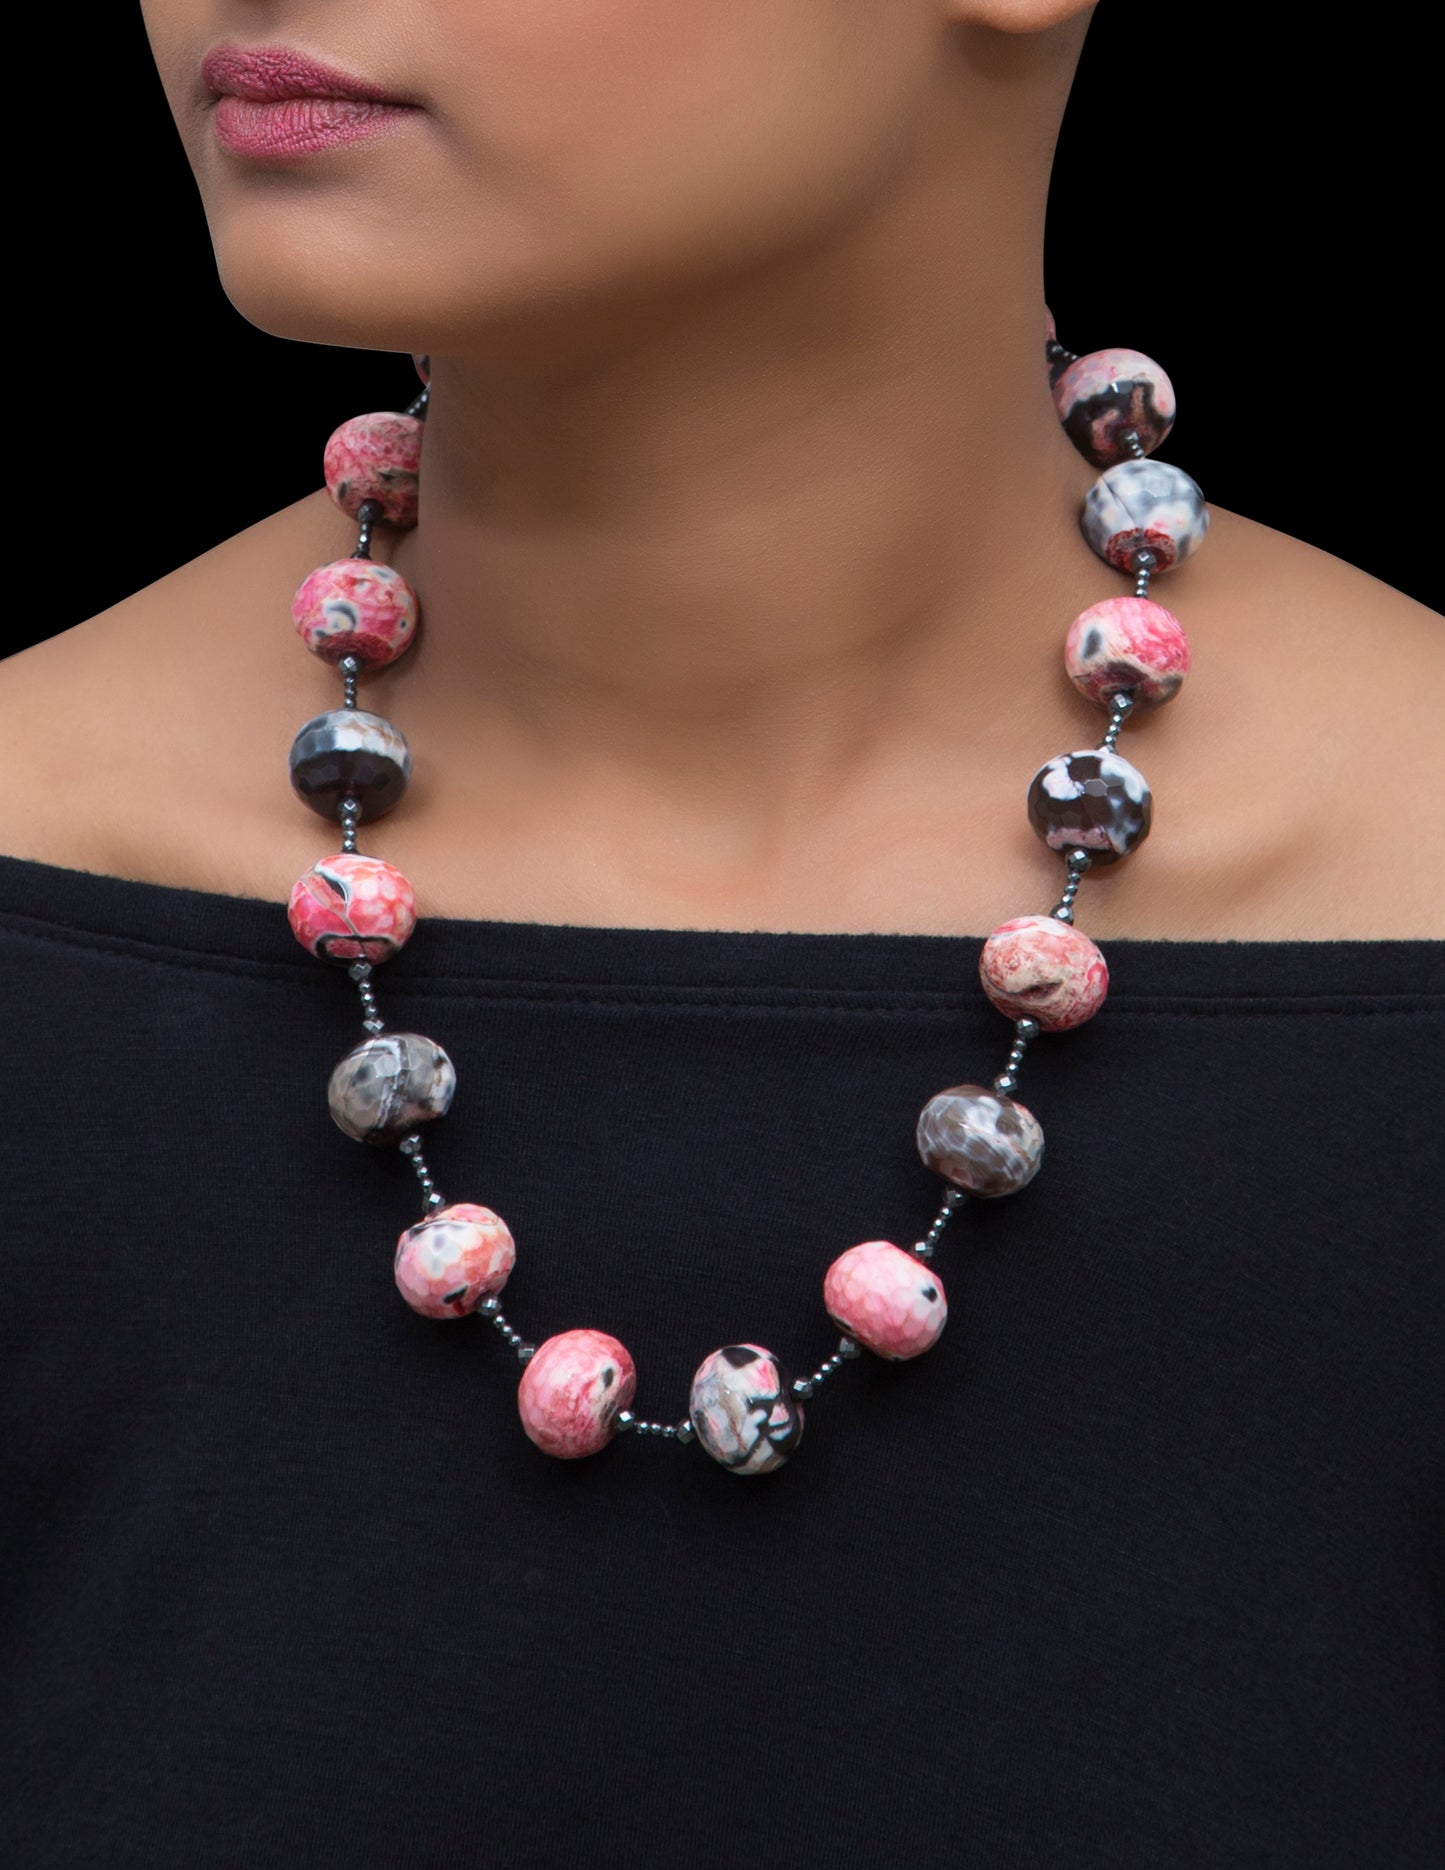 Mottled pink & grey beaded necklace